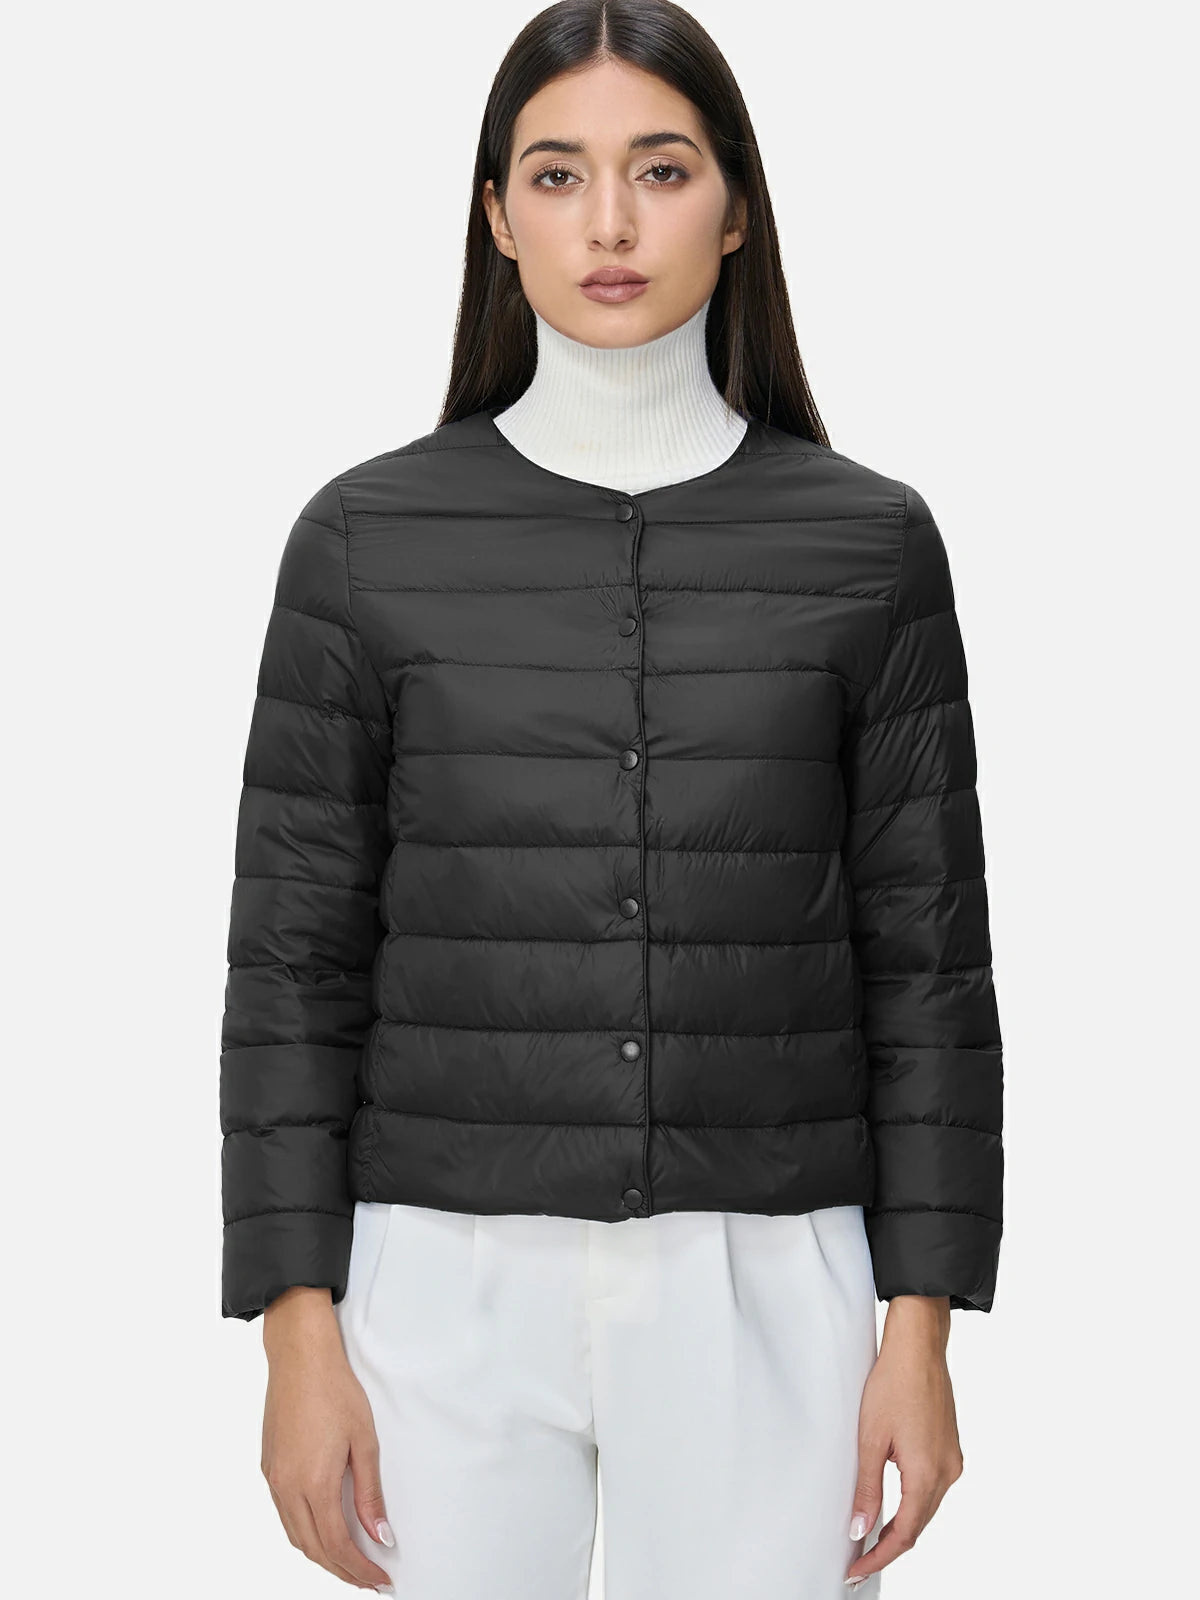 Fashionable round-neck snap-button black short-length goose down jacket